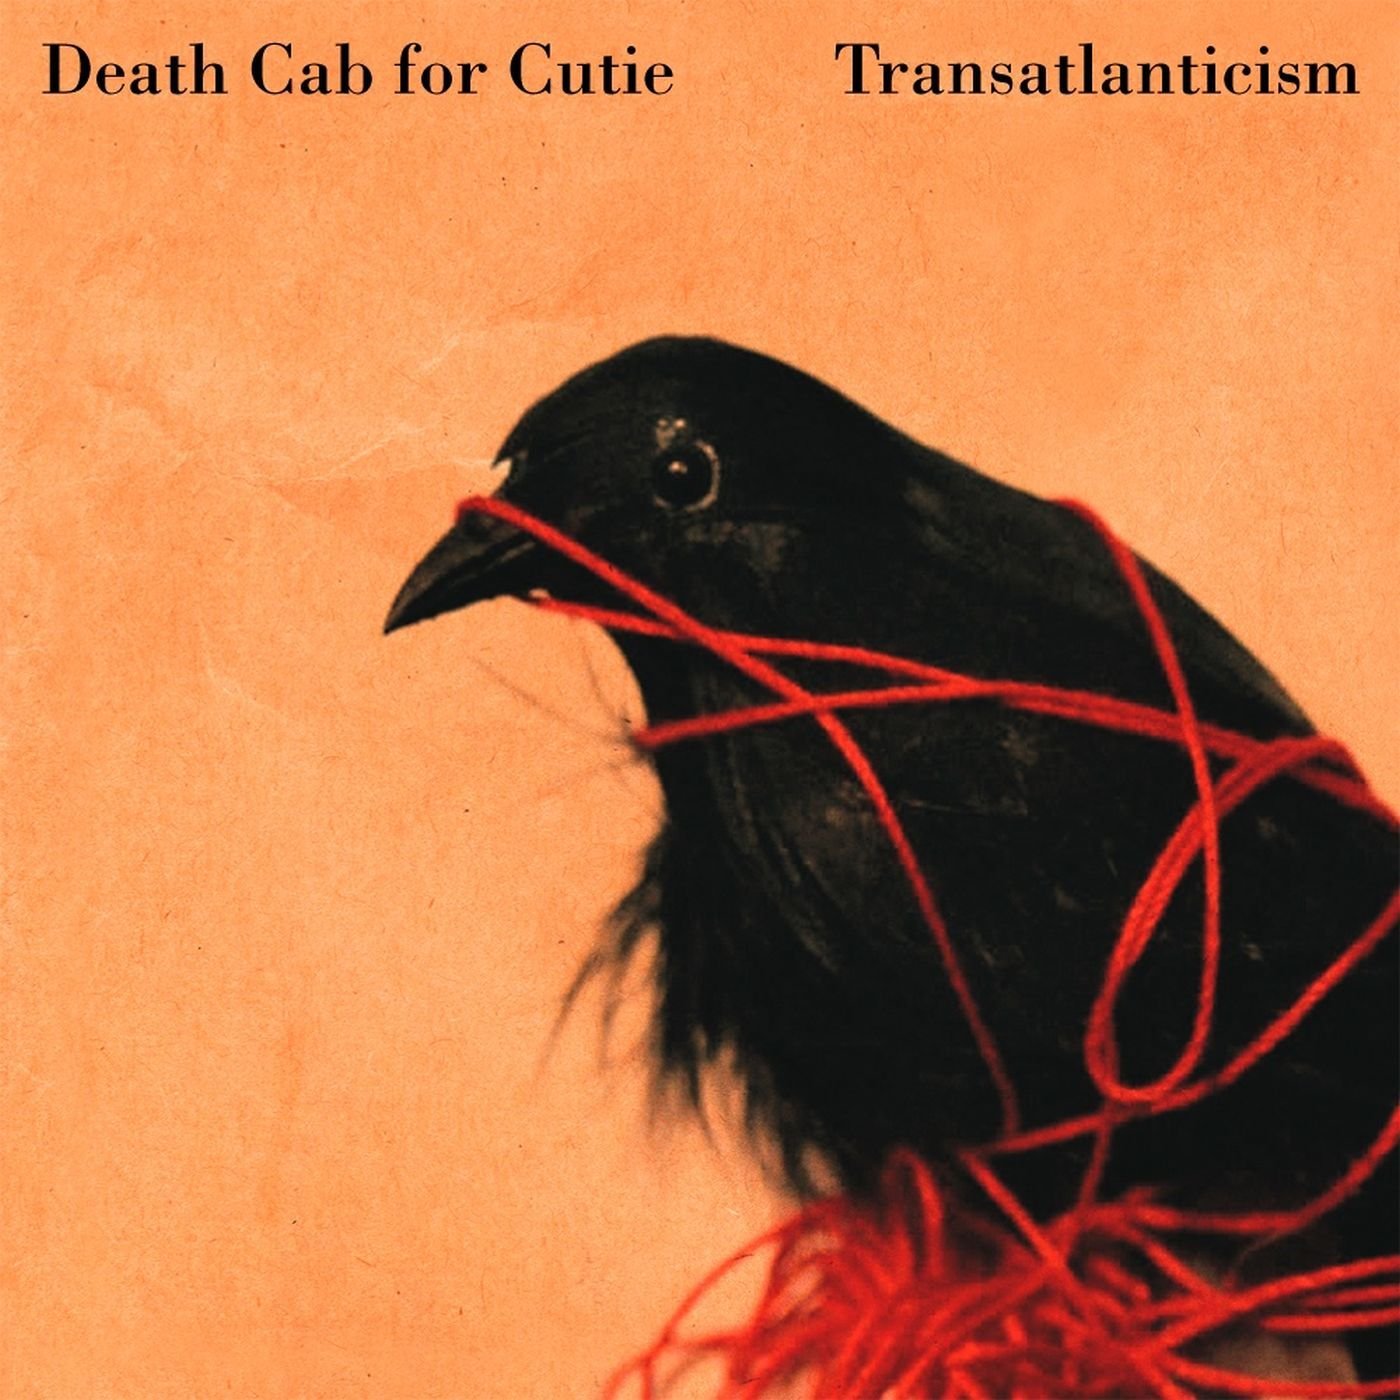 death cab for cutie tour transatlanticism